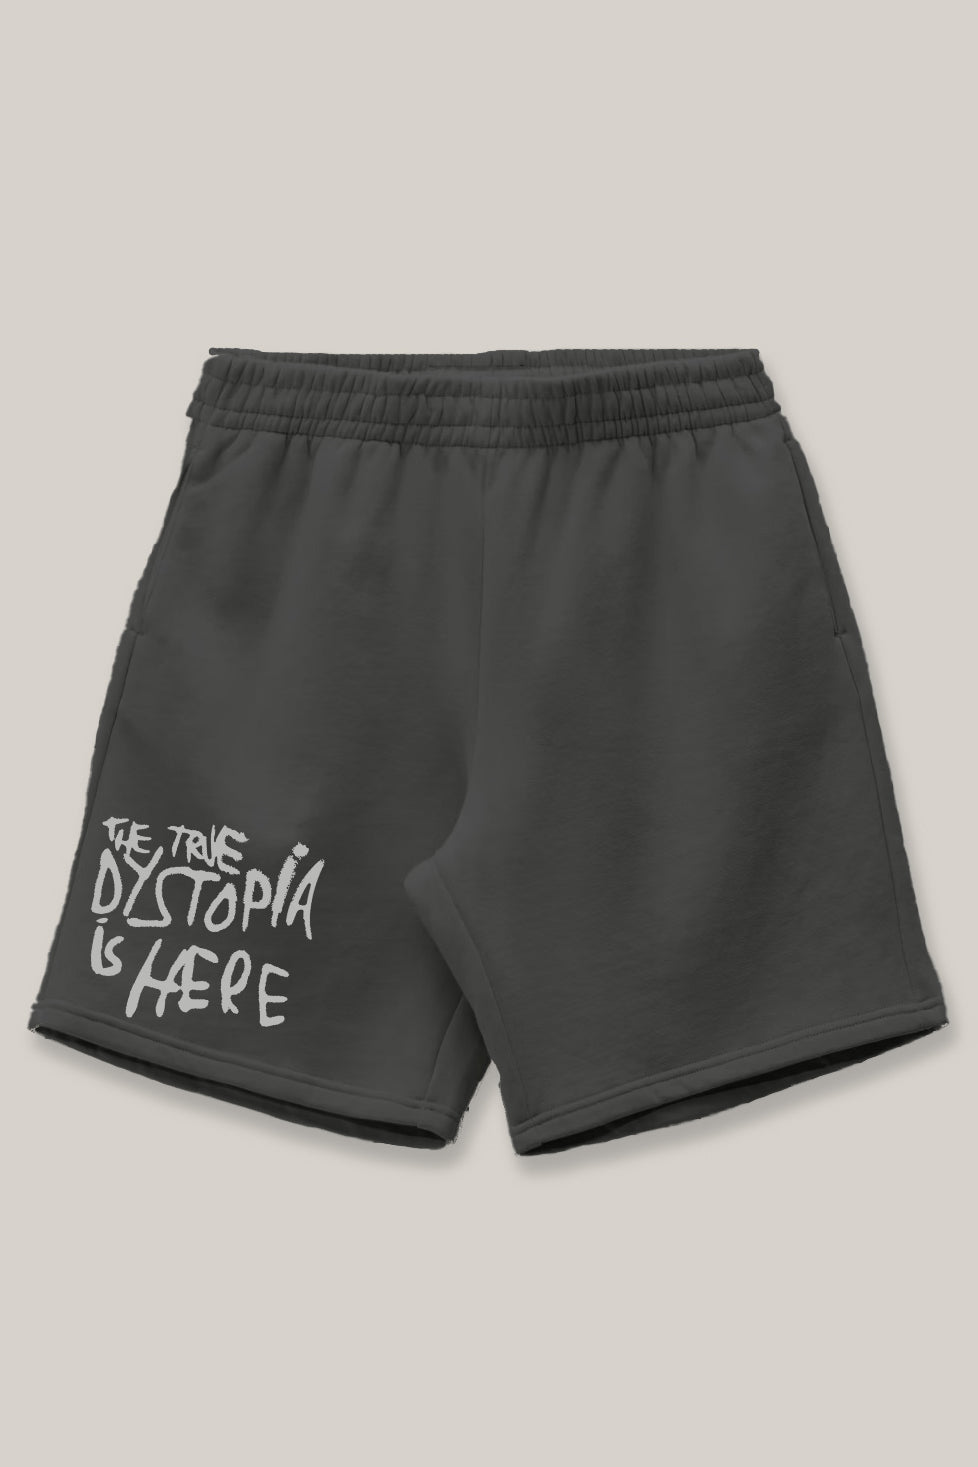 Dystopia Shorts - Grey